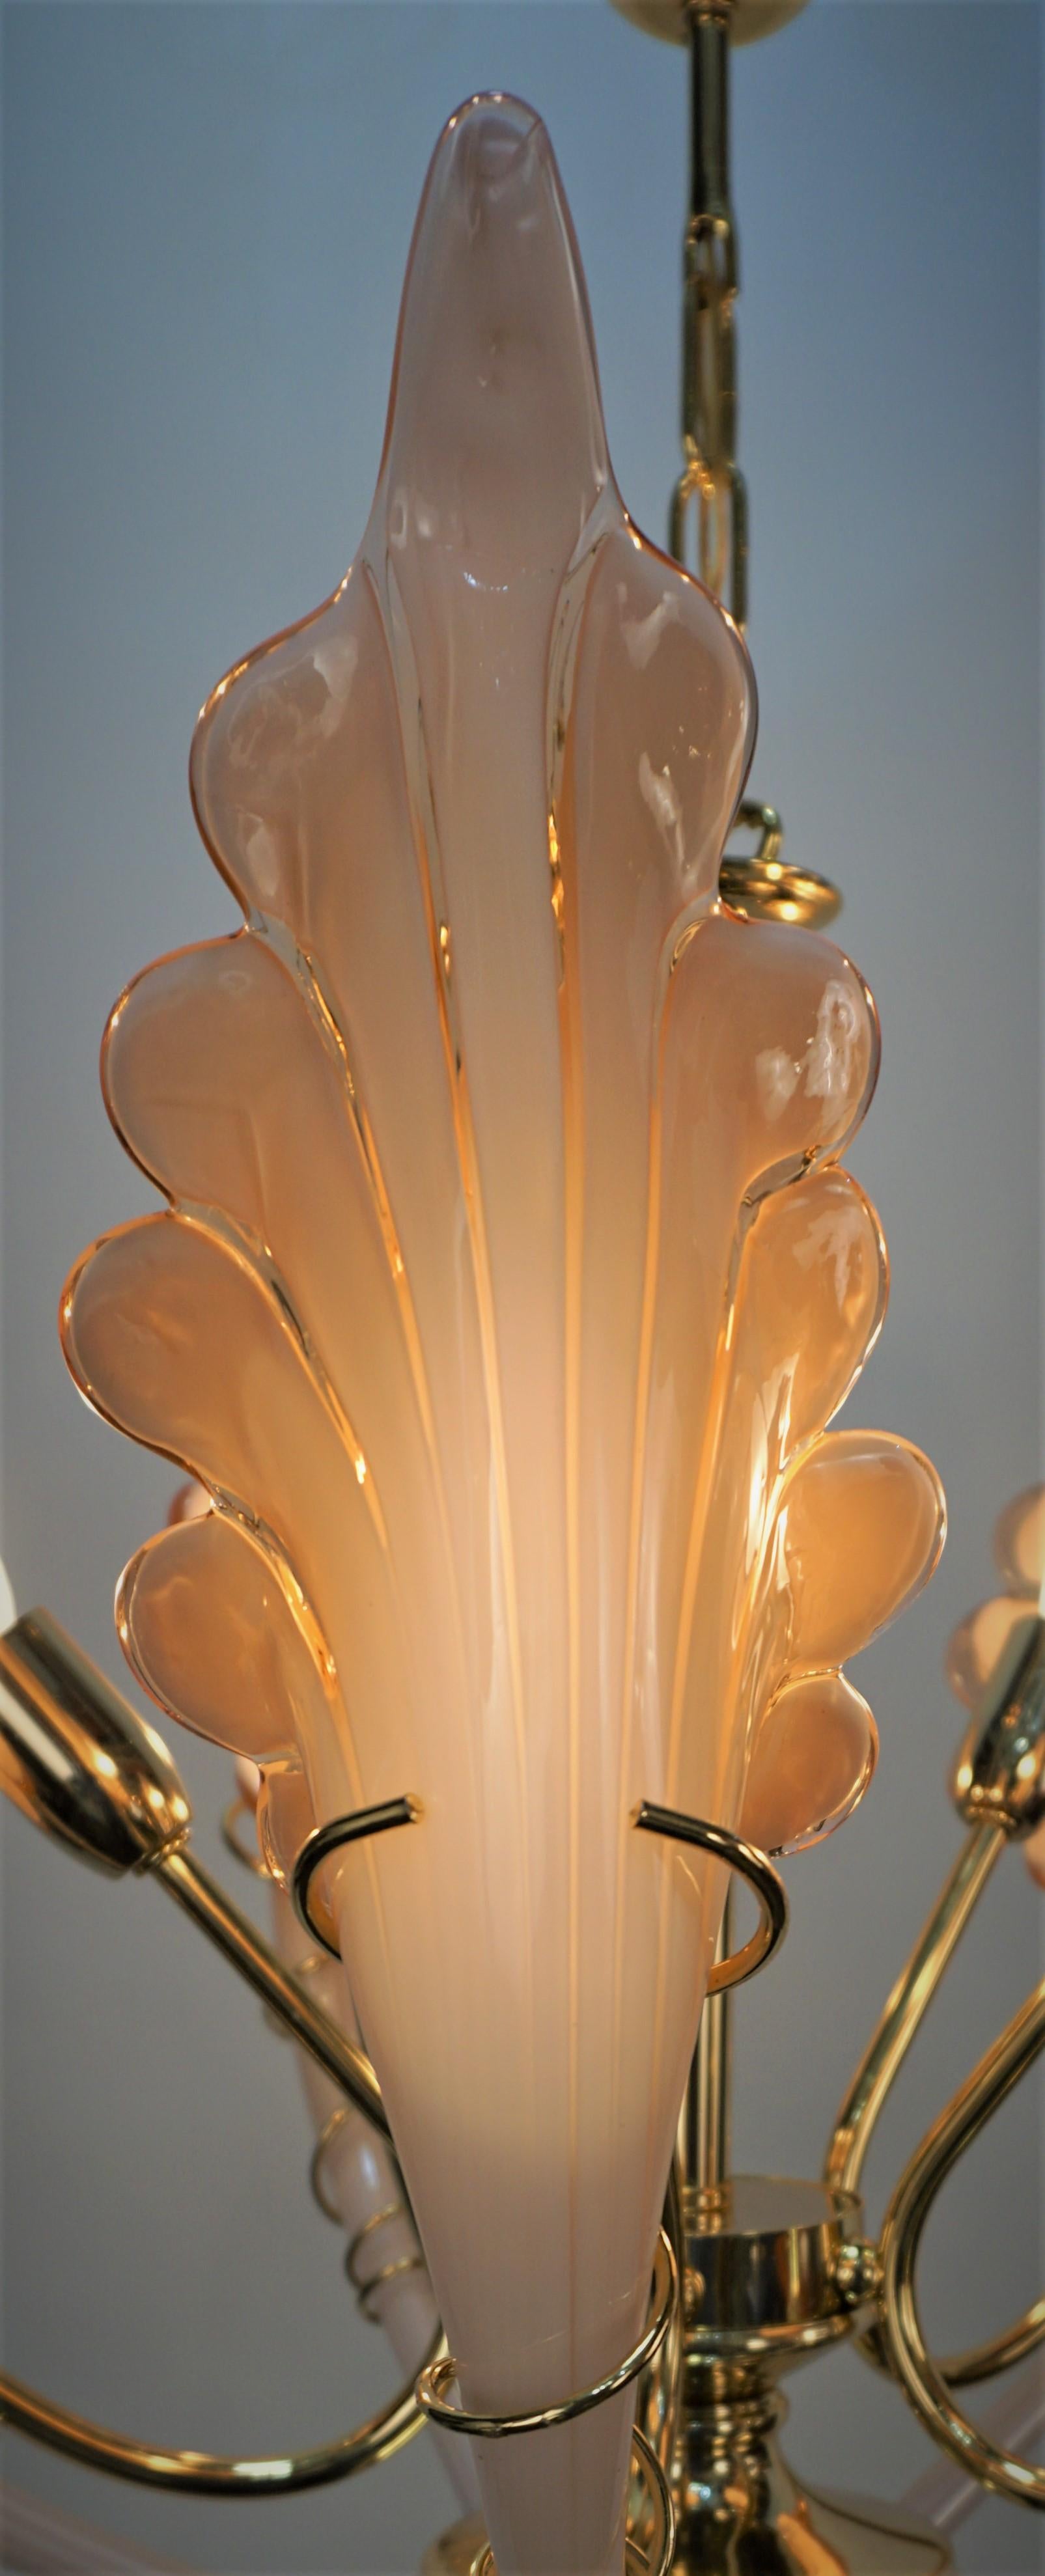 Blown glass flora shape in pink-beige with polished gilt bronze frame chandelier.